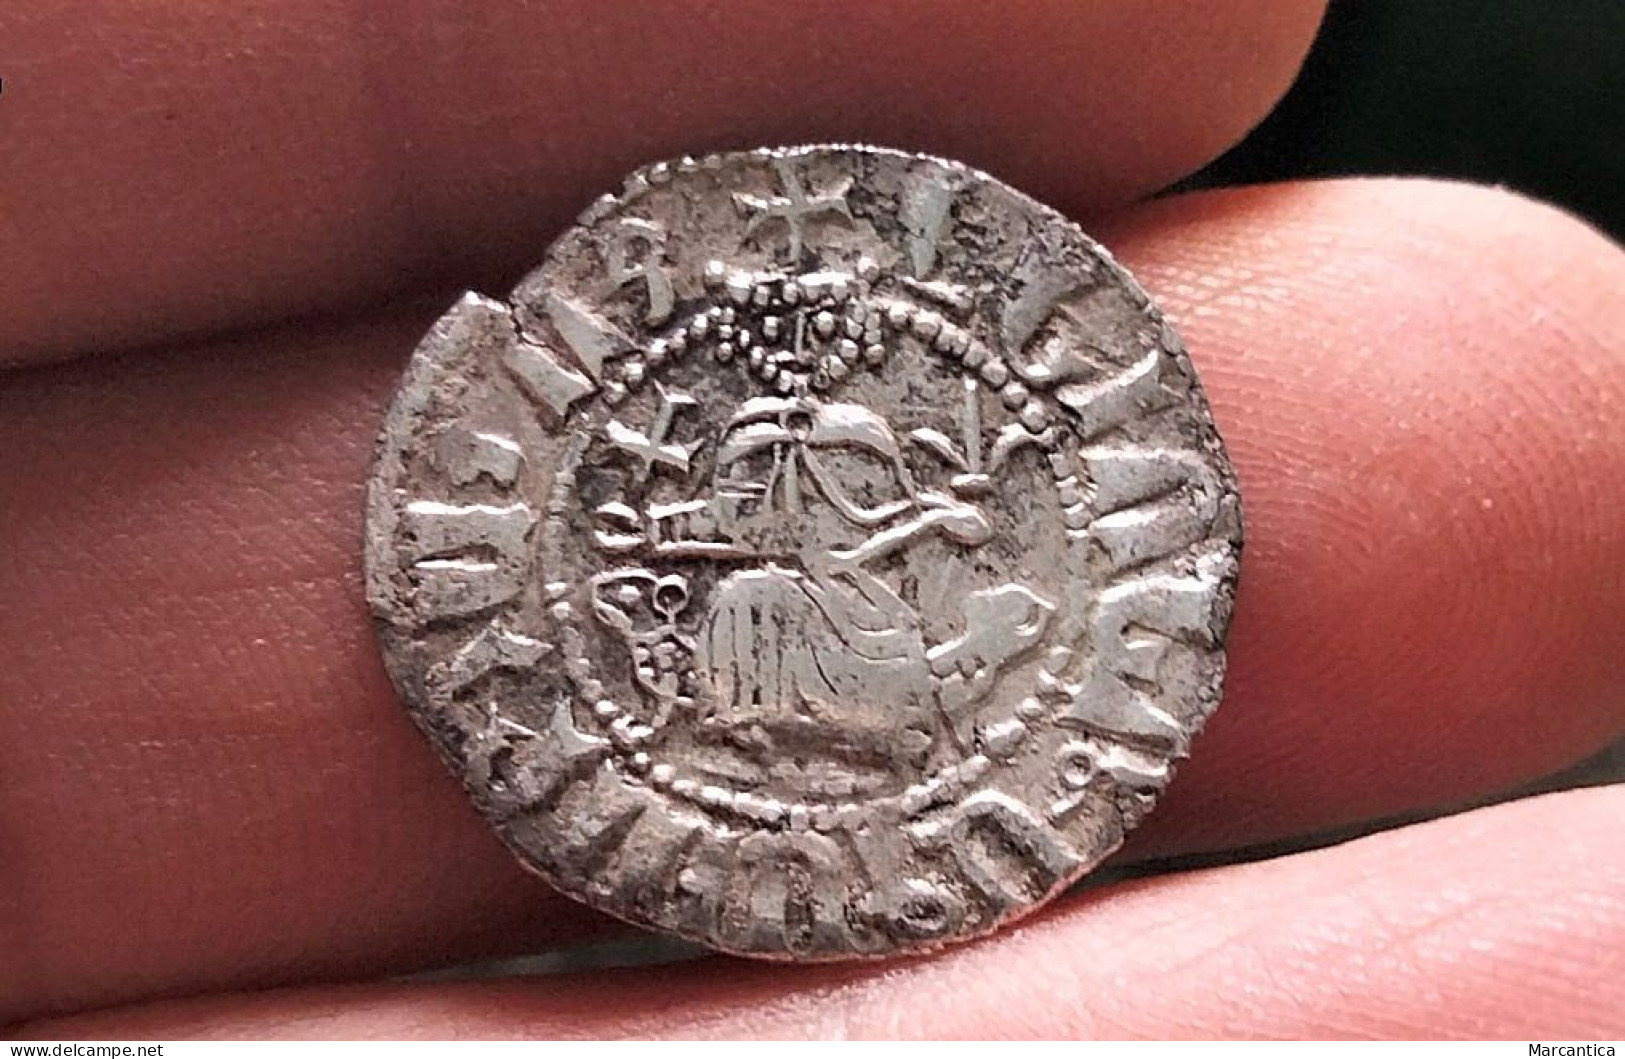 Armenian Silver Coin Tram Of King Levon I - 1198 To 1219 AD. - Arménie